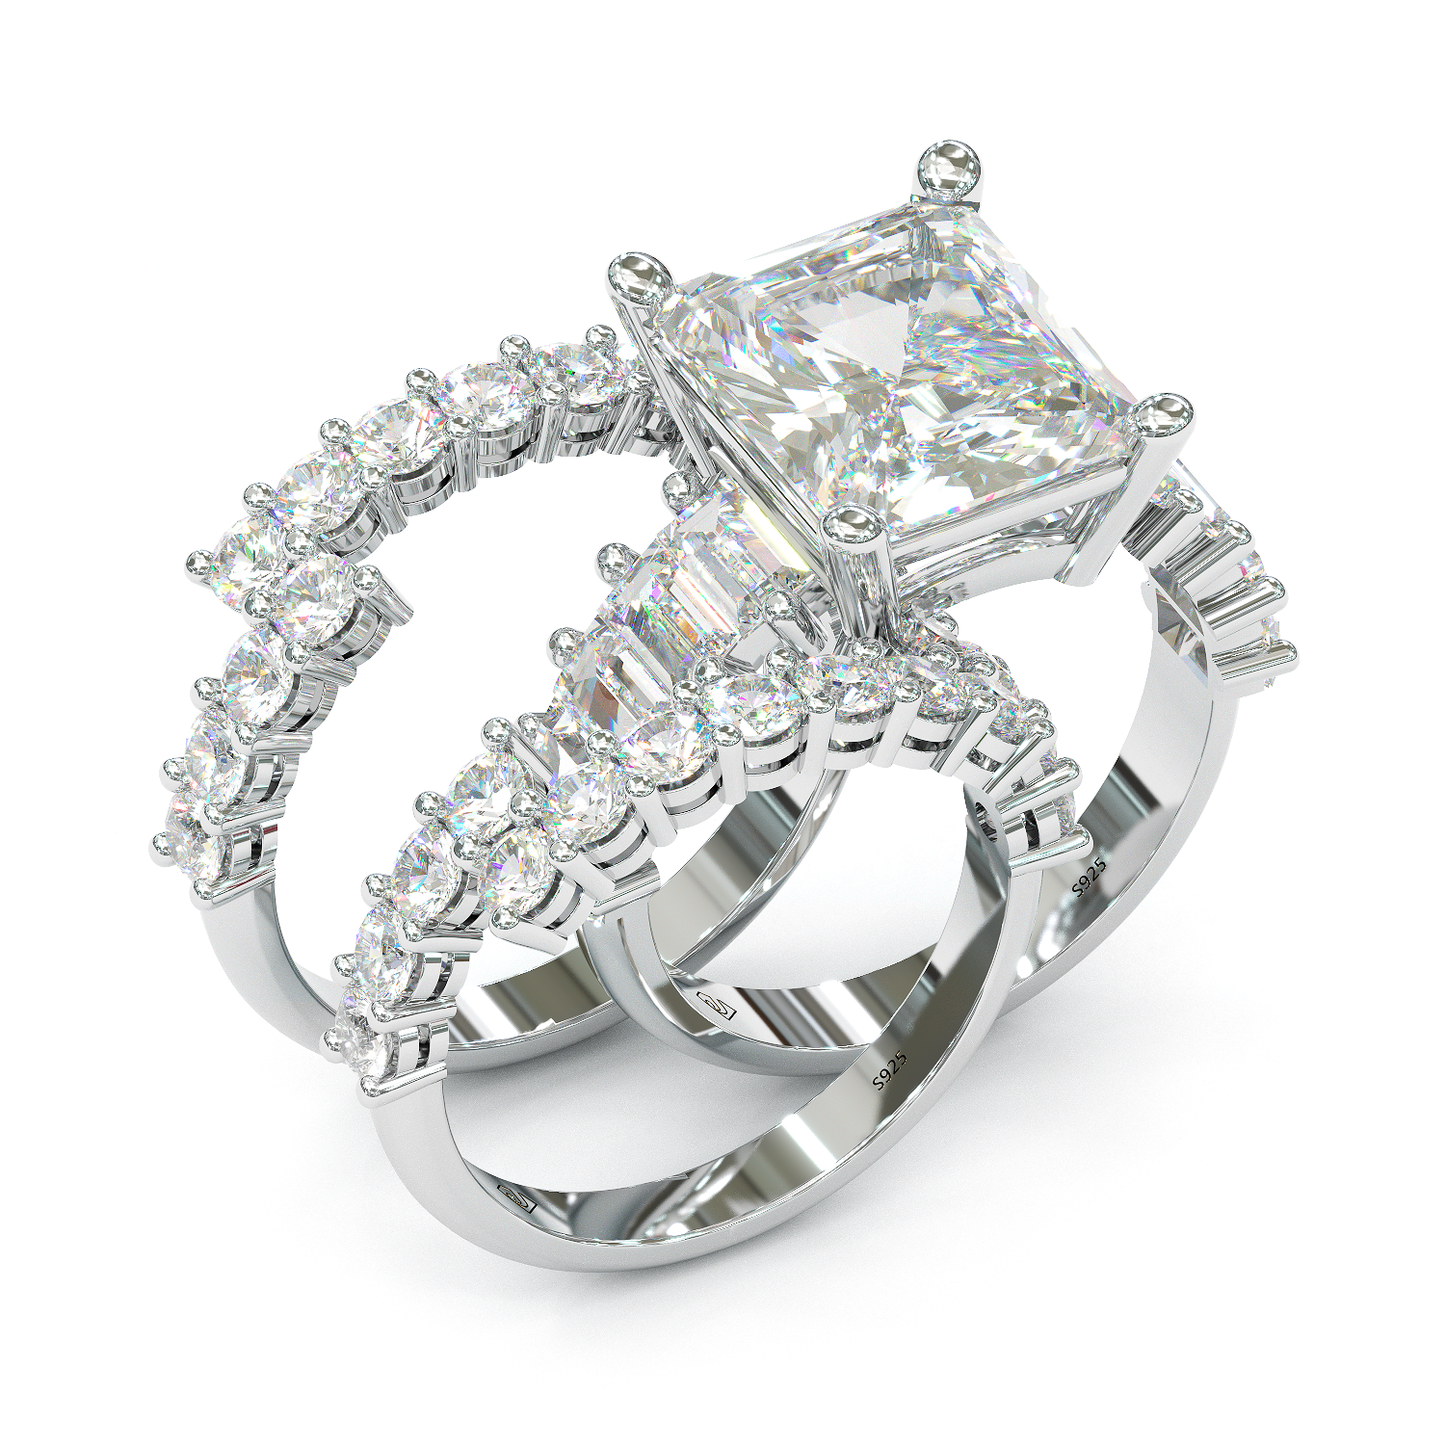 Jorrio handmade radiant cut classic sterling sliver wedding ring 3pcs bridal set